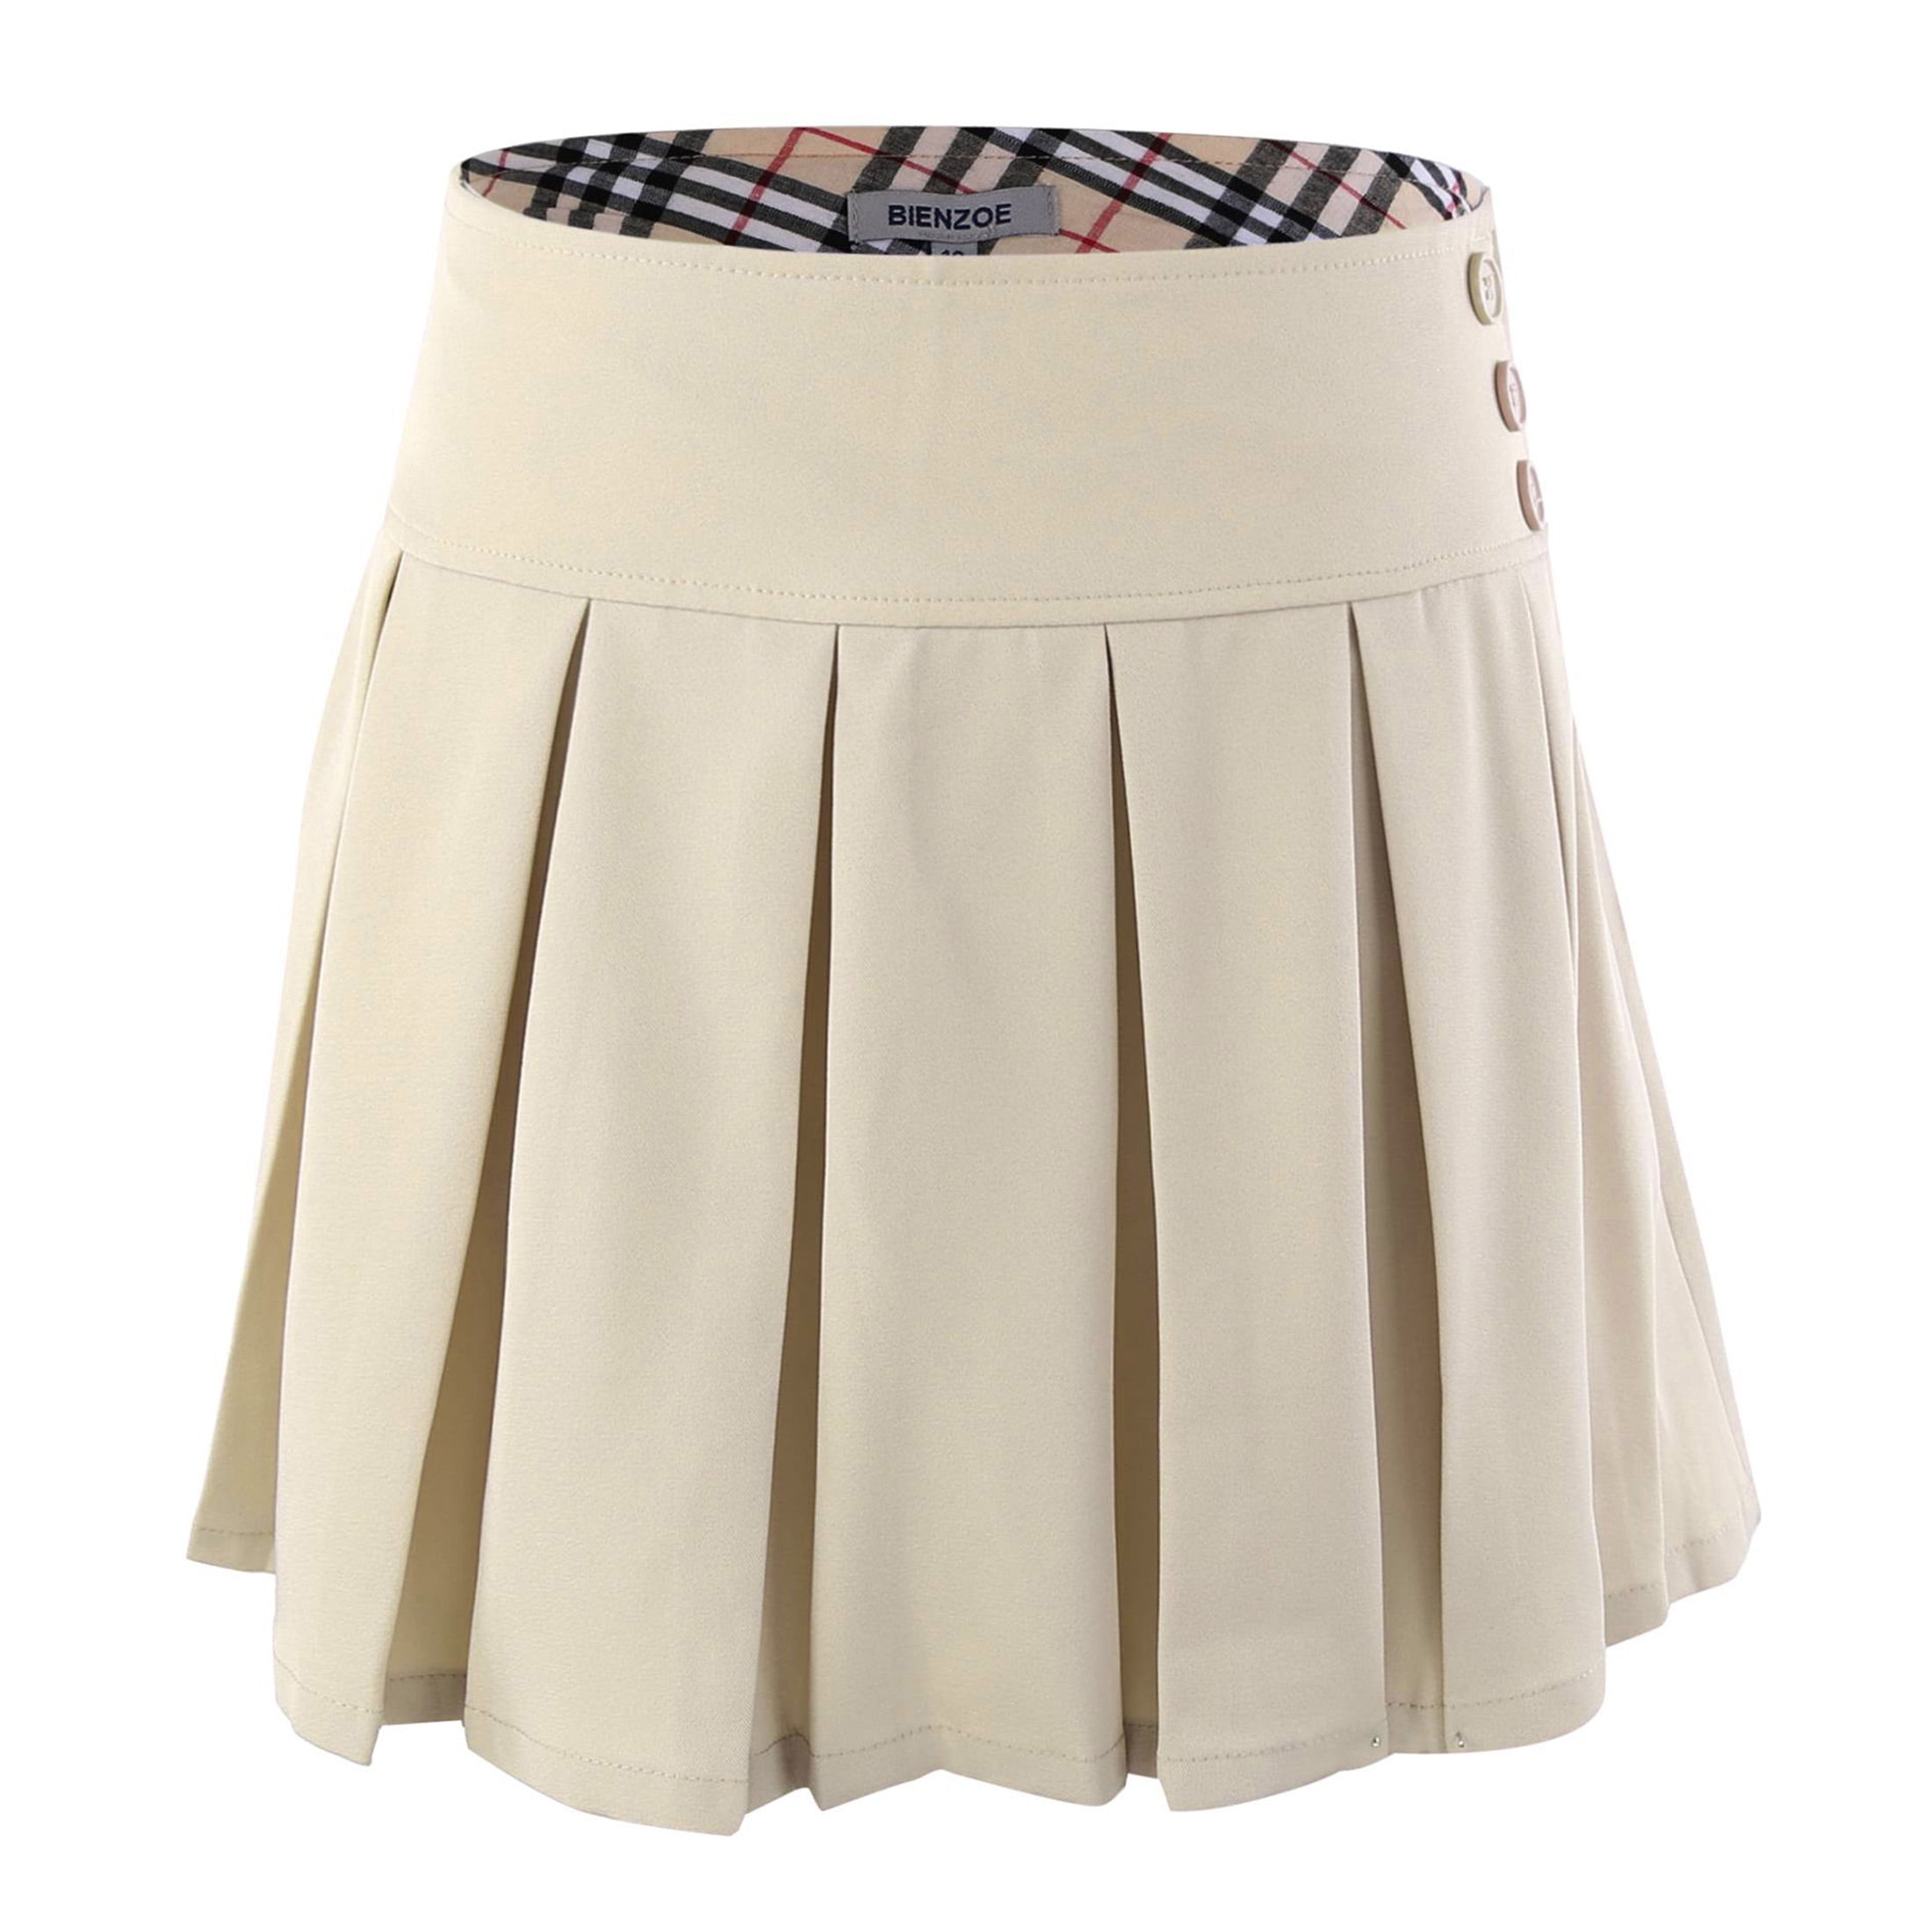 Bienzoe Girls Cotton Stretchy Elastic Wasit School Uniforms Pleated Skirt 